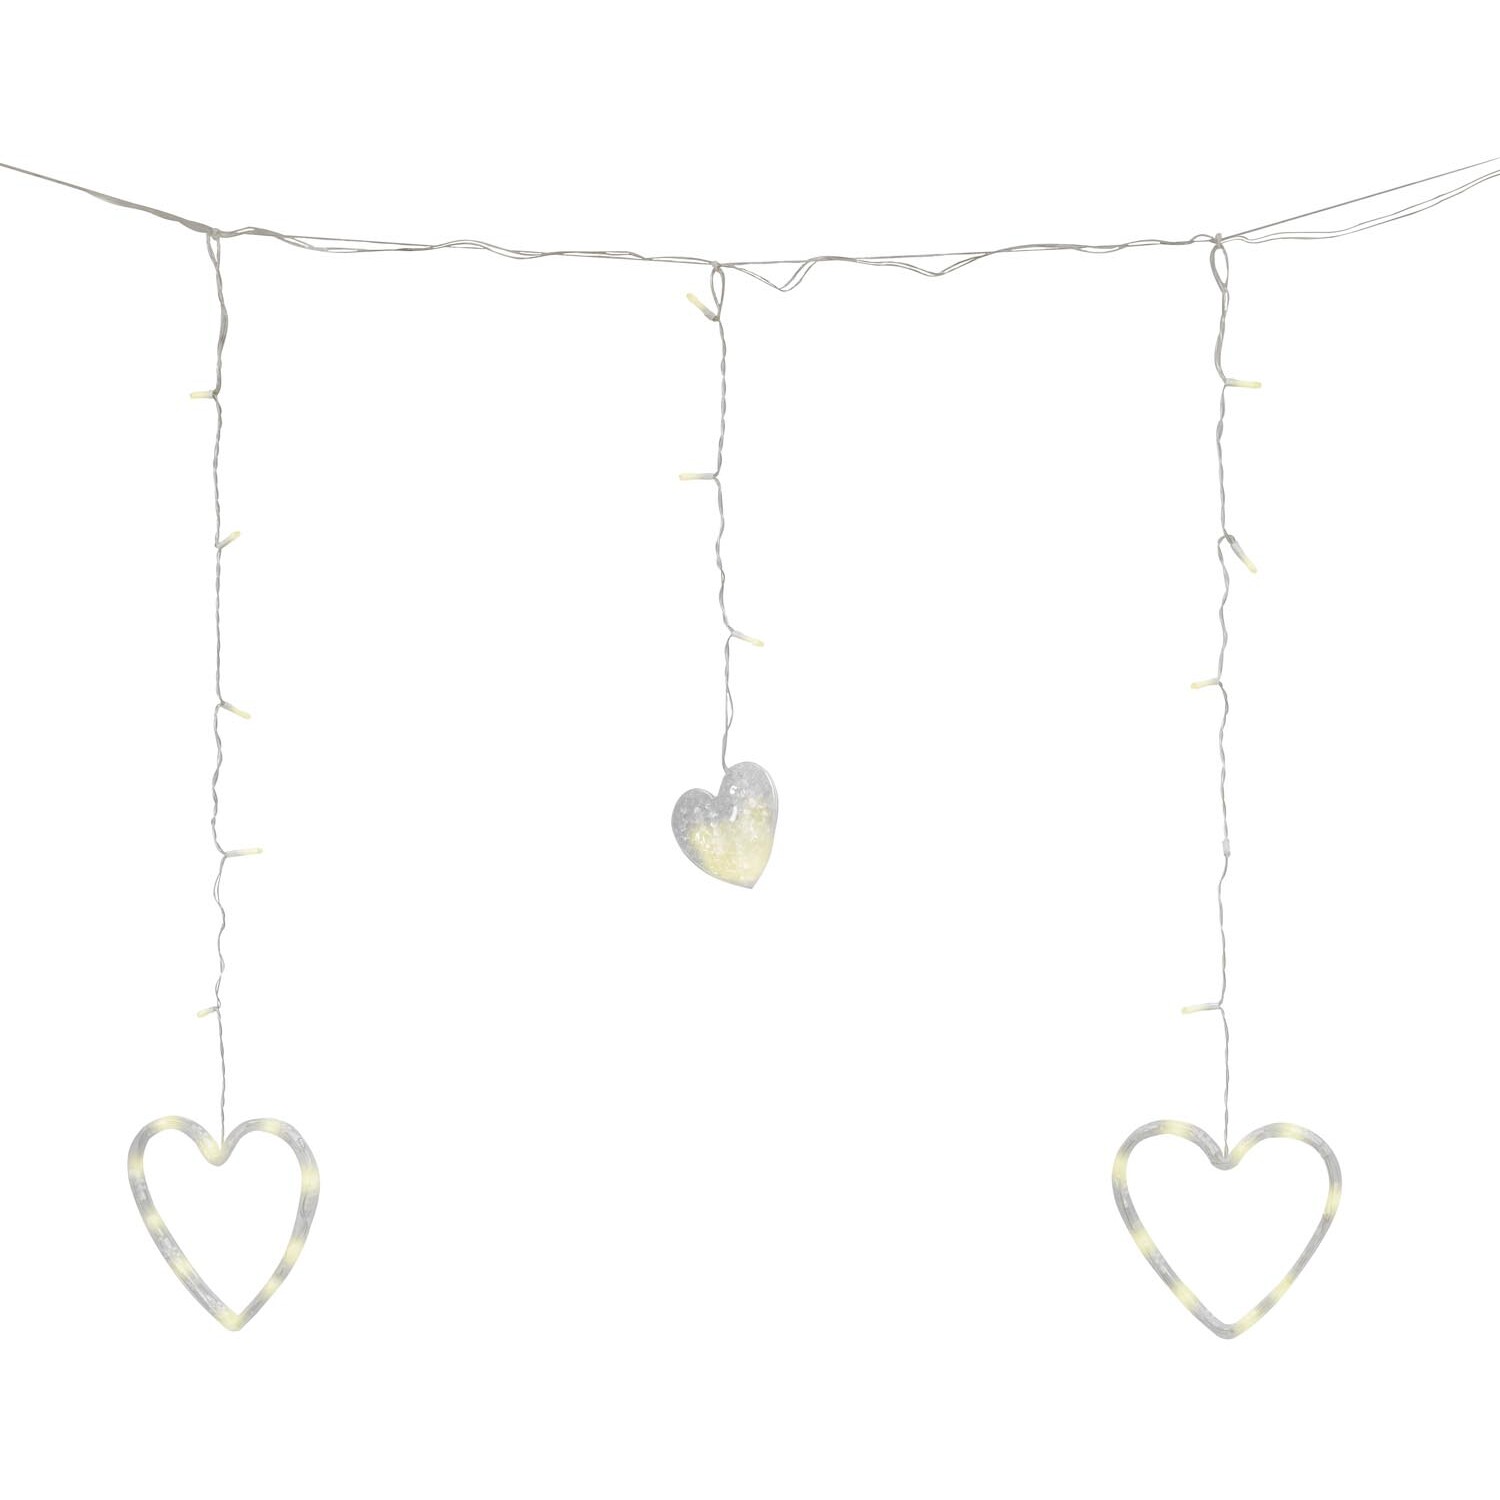 LED Heart Curtain String Light - Warm White Image 2